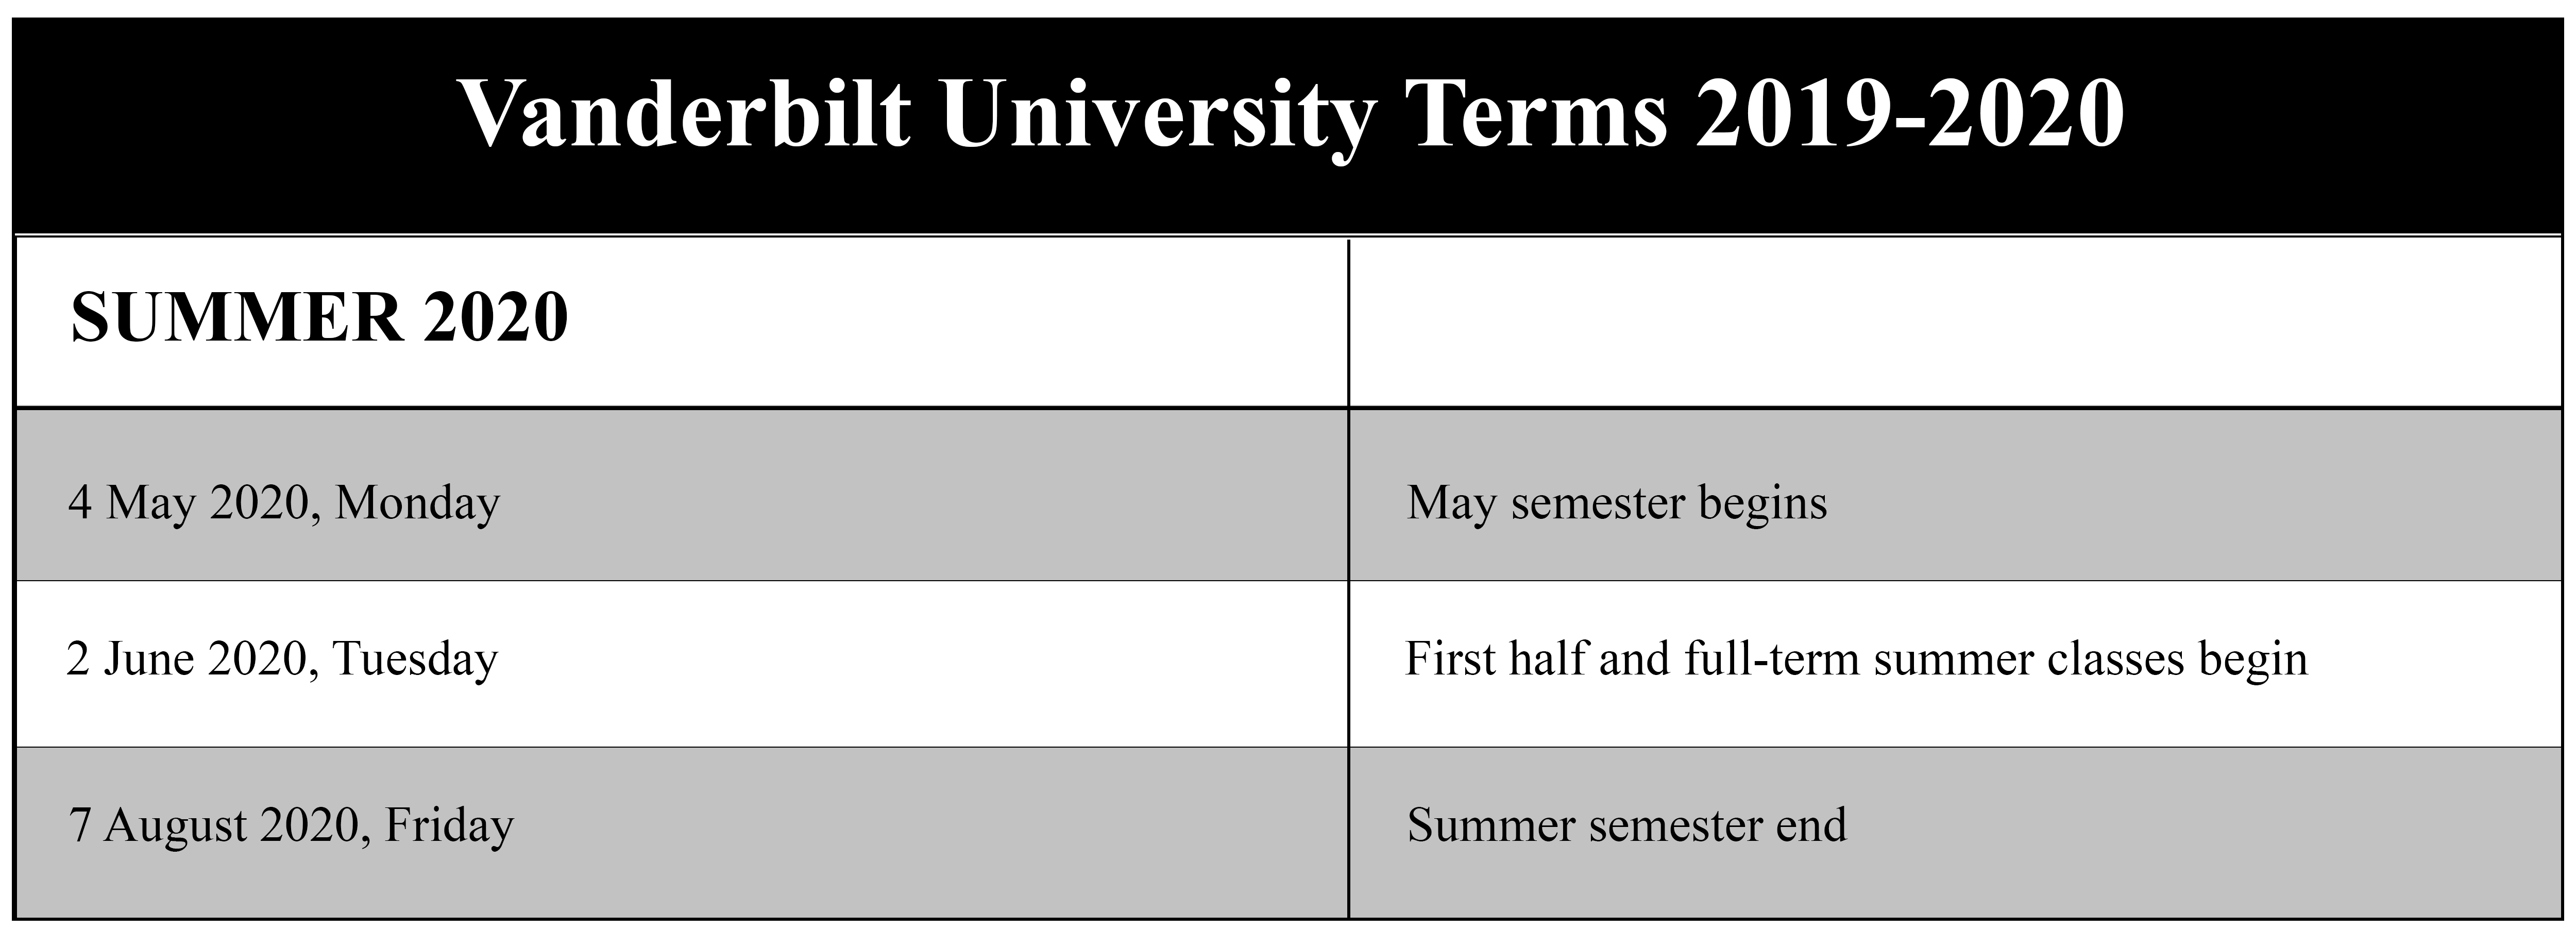 VanderbiltUniversityTerms20192020(SUMMER)